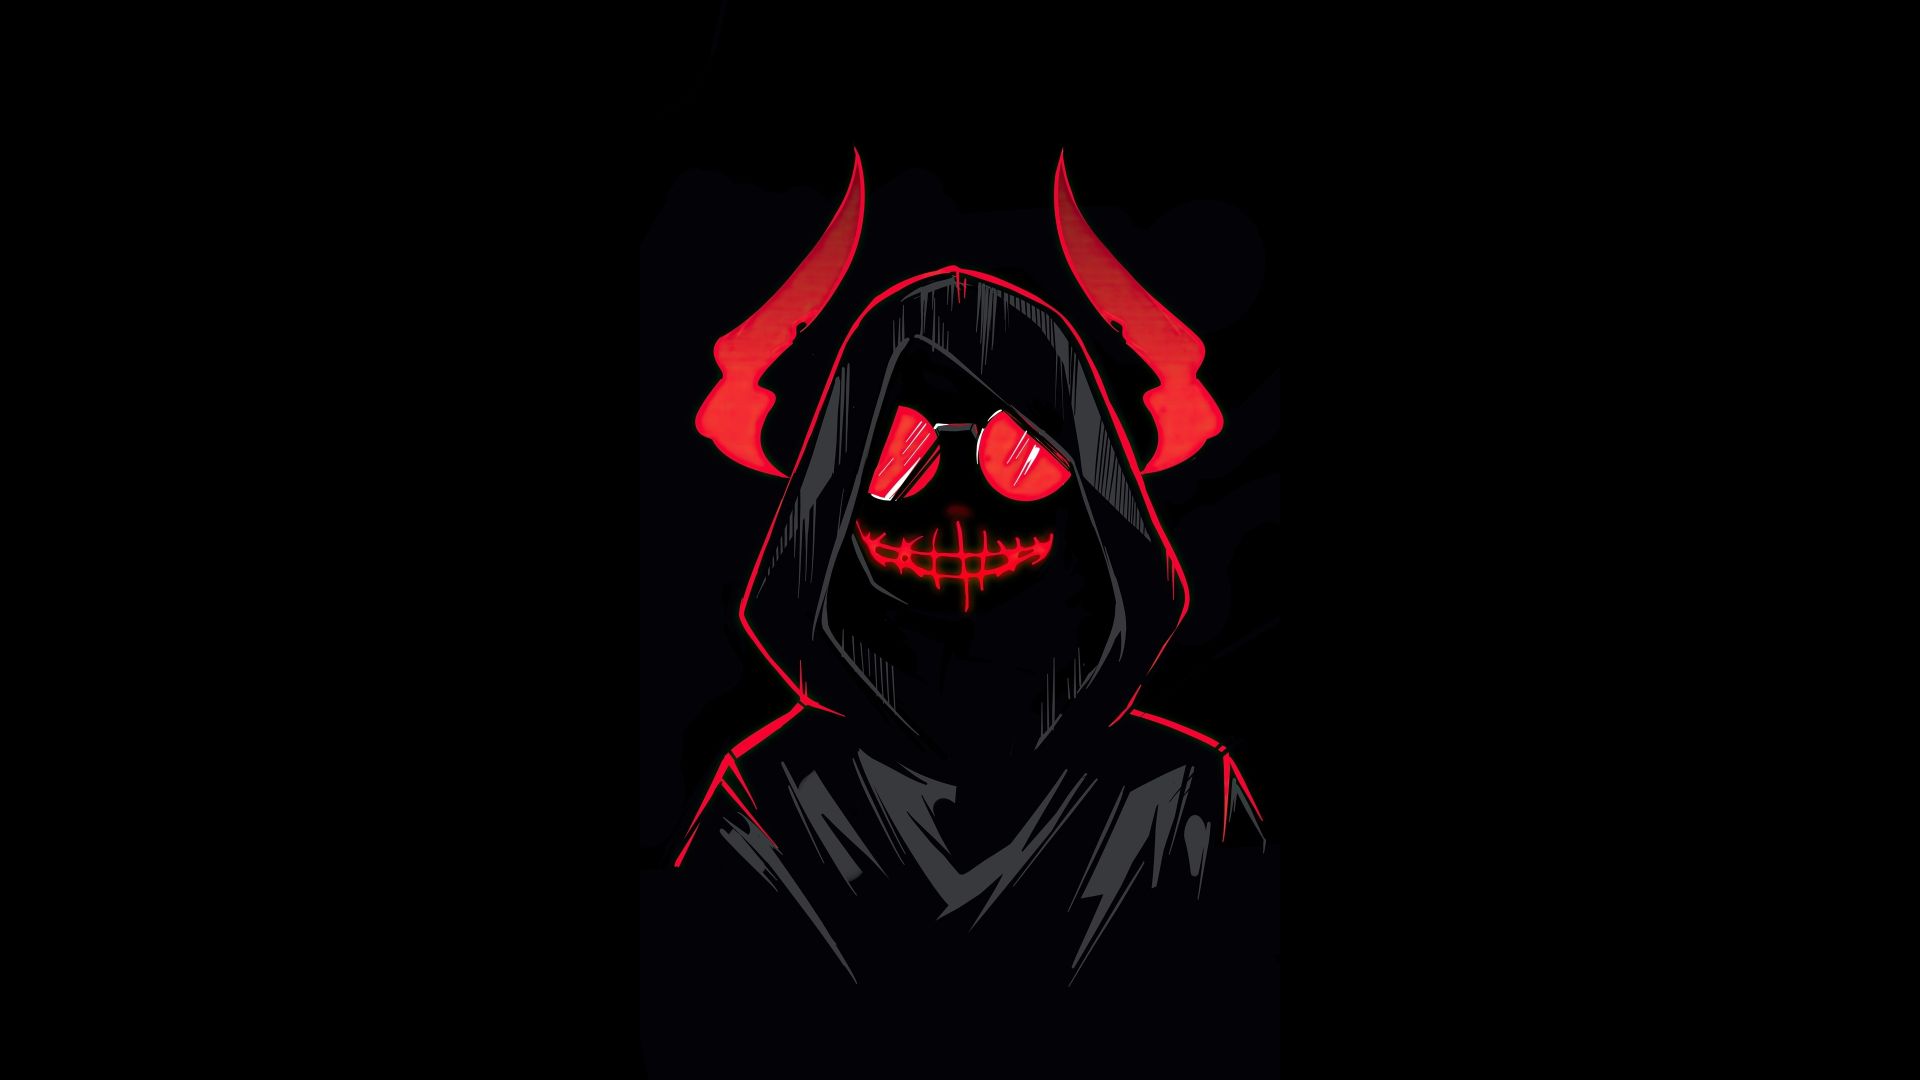 Devil boy, dark & minimal art wallpaper, HD image, picture, background, bcaa6c